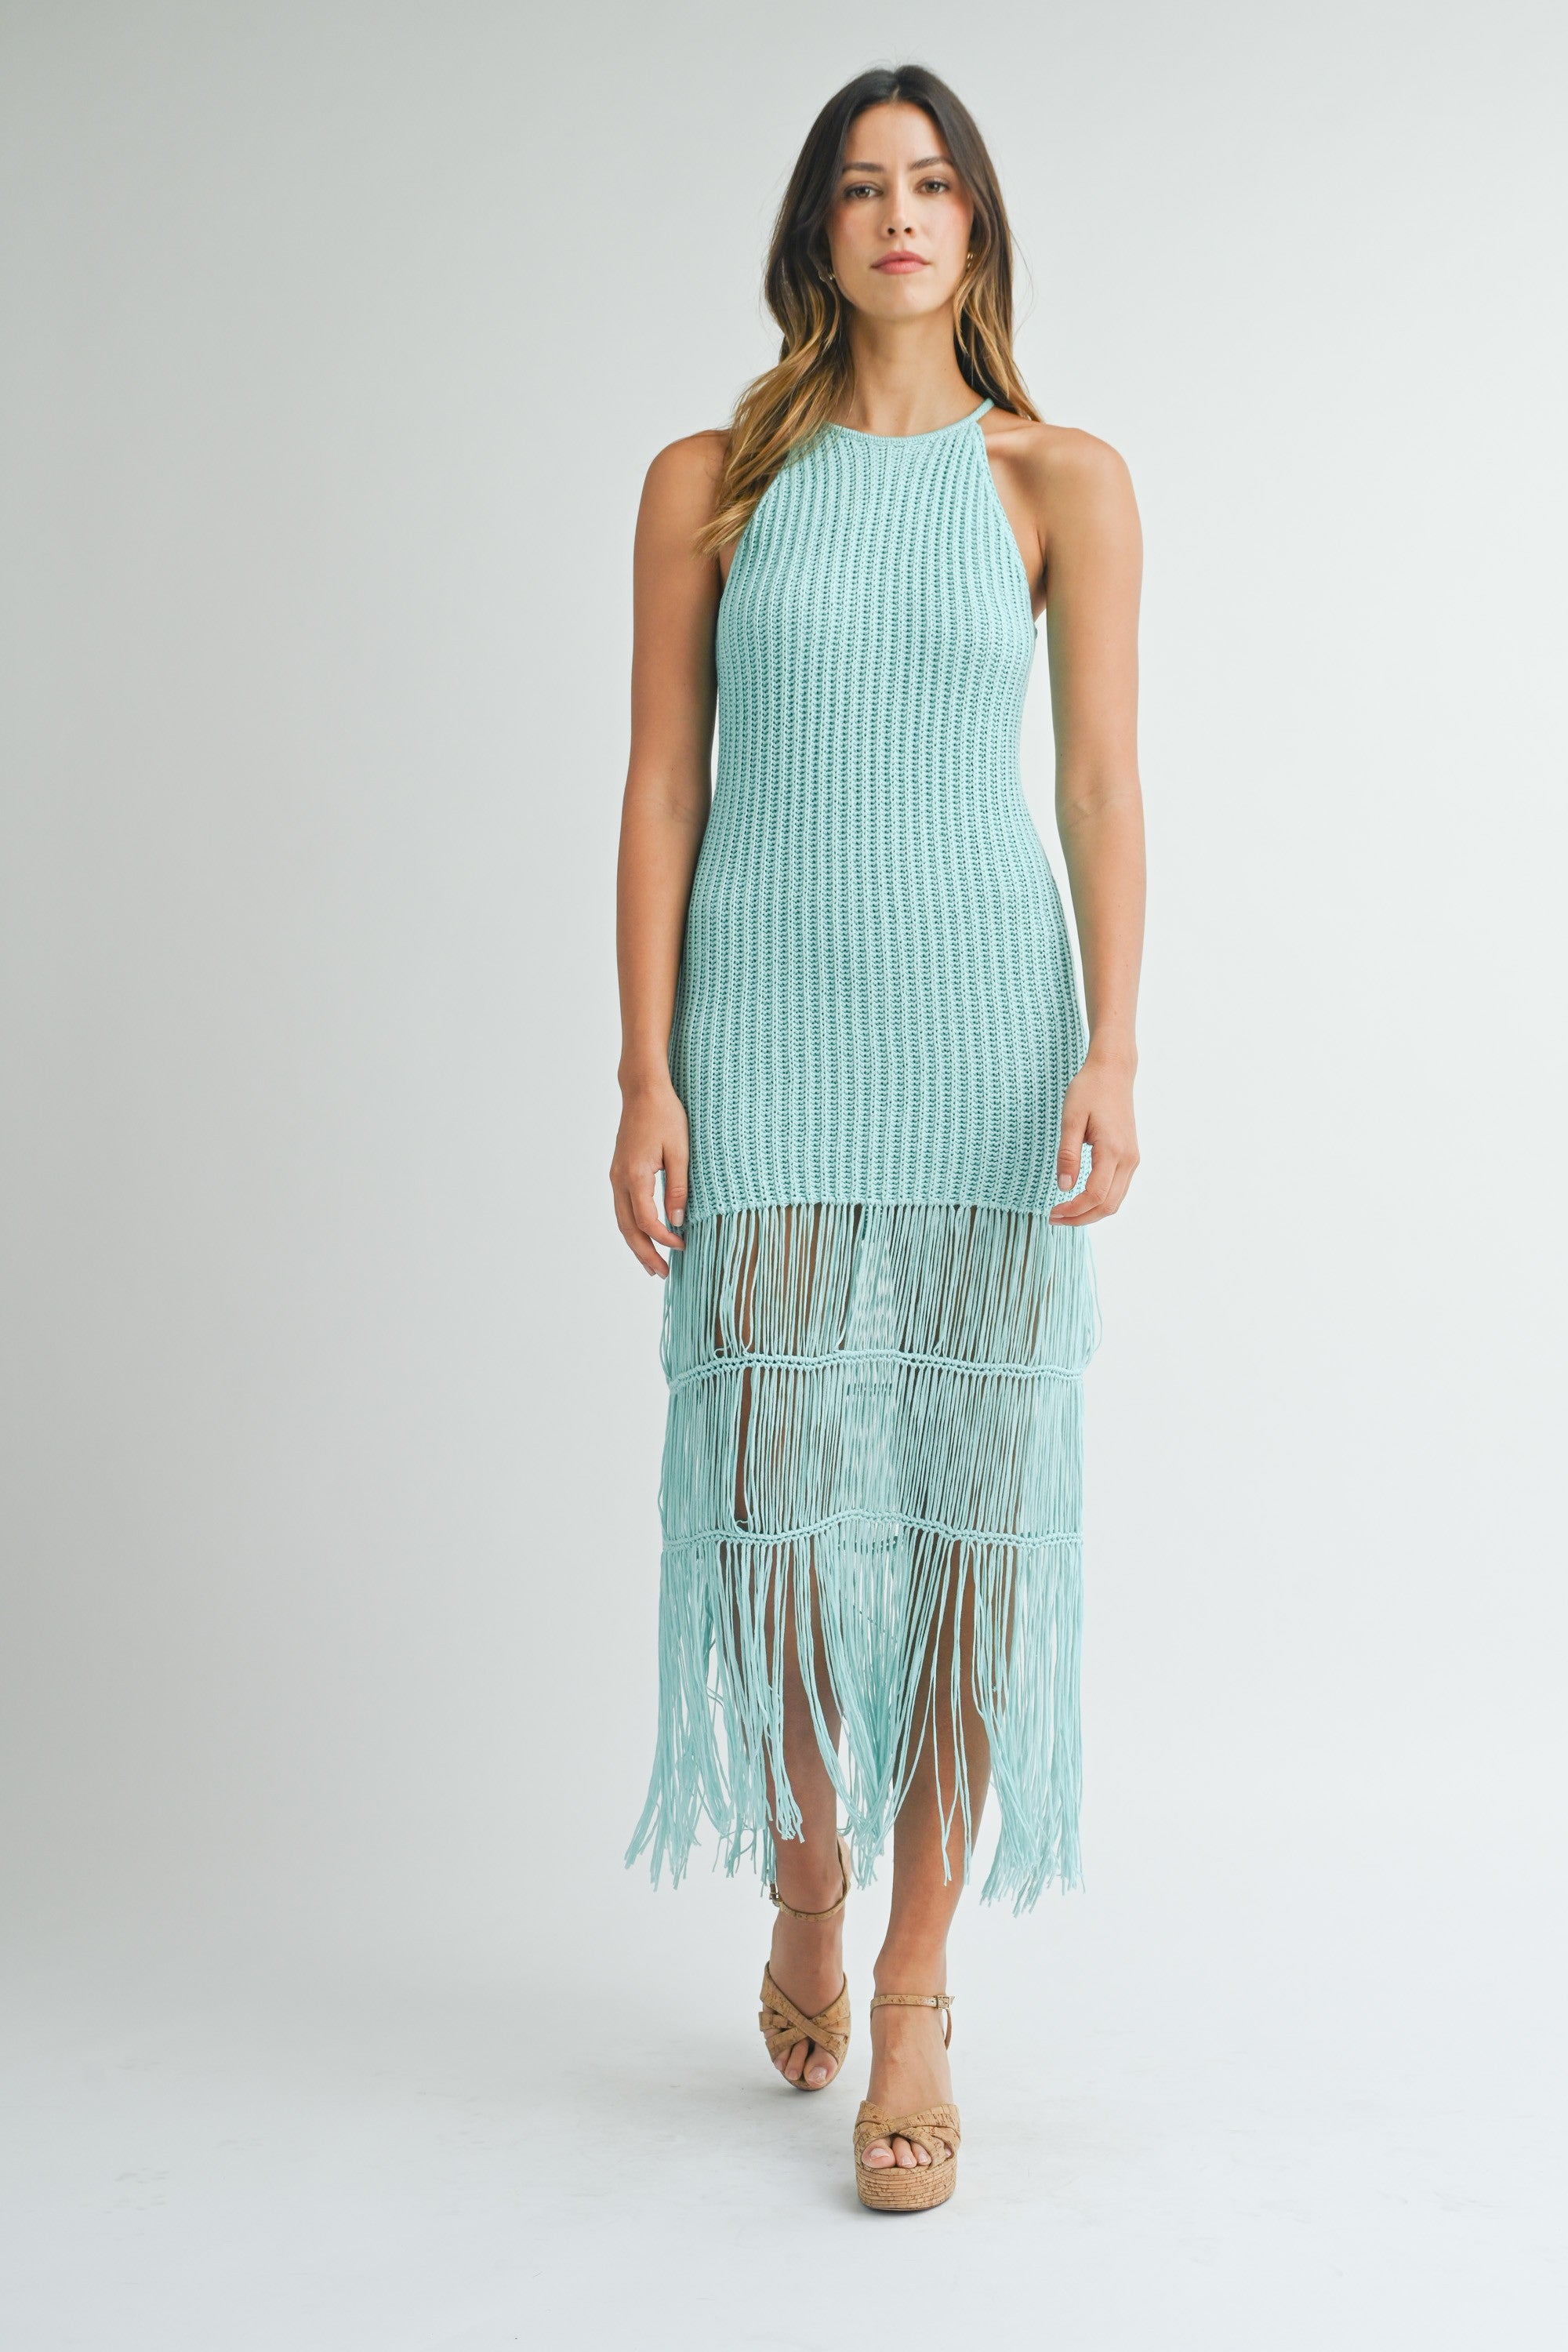 Aqua Crochet Knit Halter Fringe Midi Dress | Collective Request 